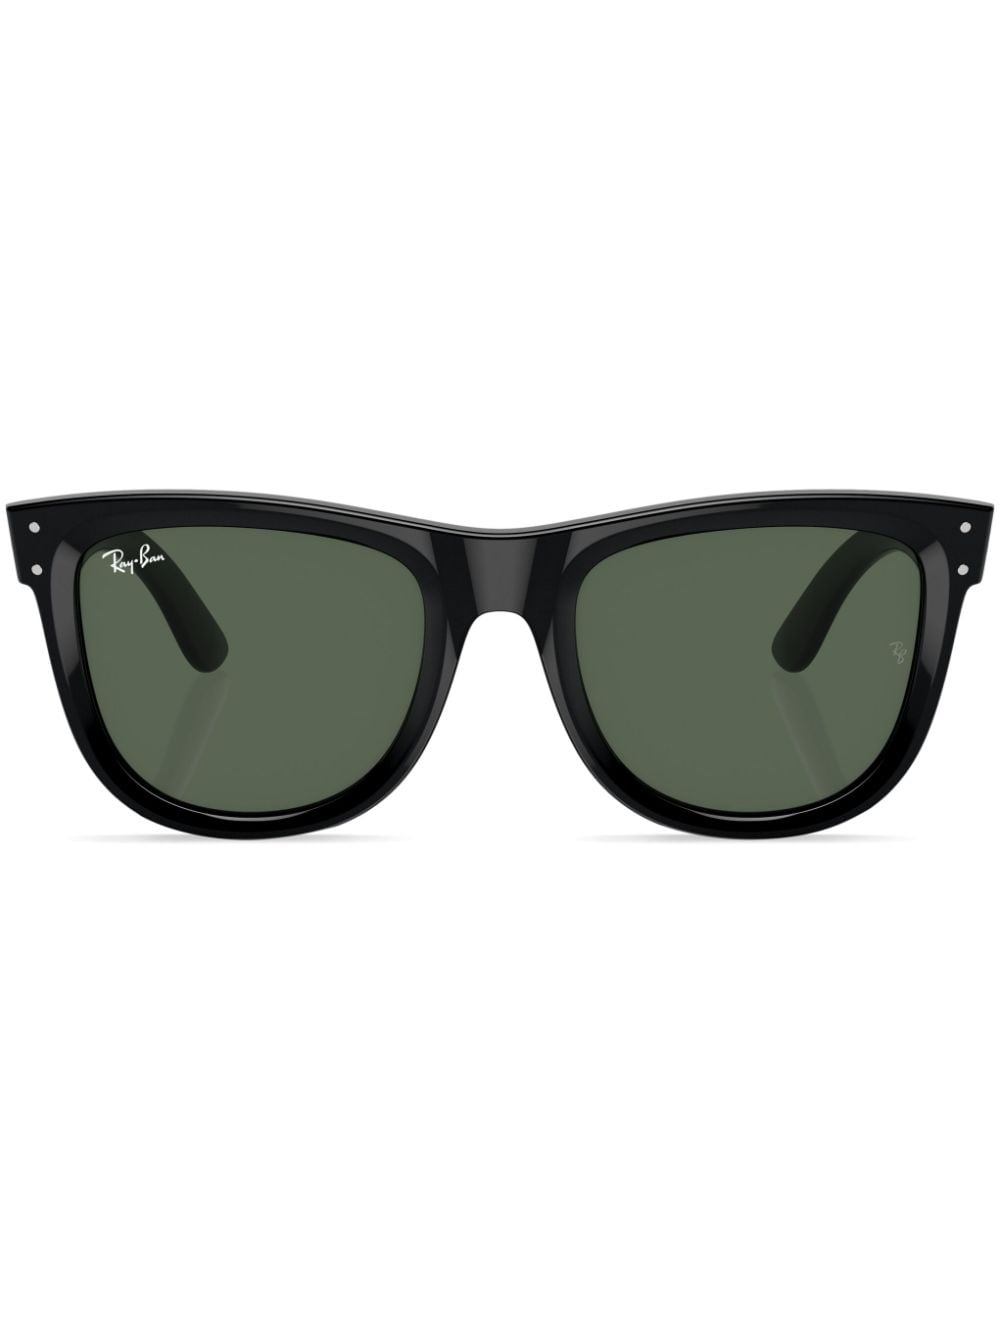 Ray-Ban Wayfarer Reverse tinted sunglasses - Black von Ray-Ban